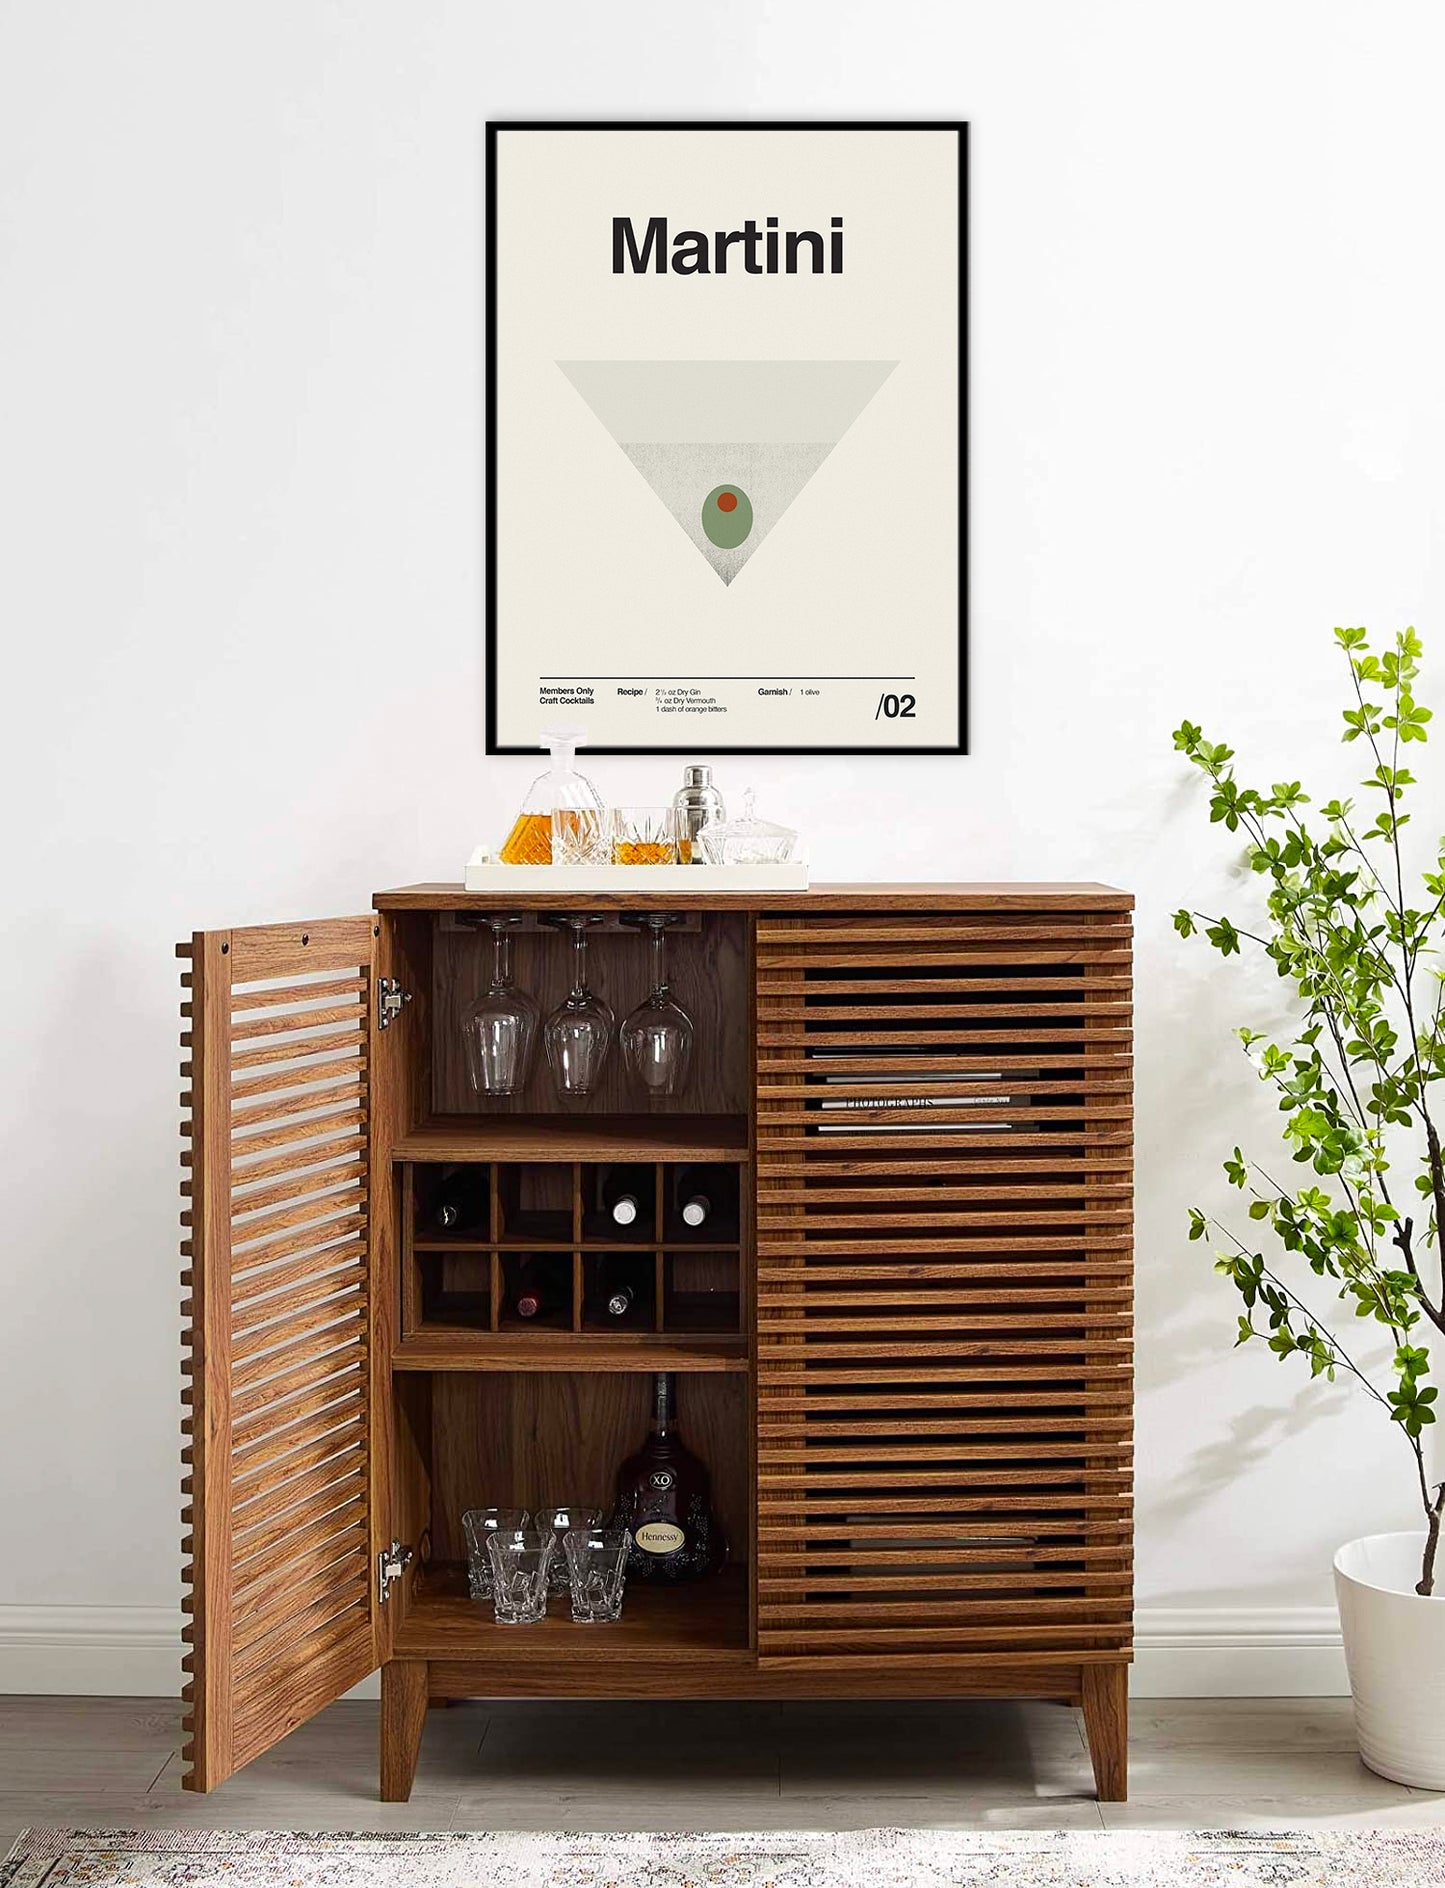 Beach First Martini Later Graphic by design ArT · Creative Fabrica